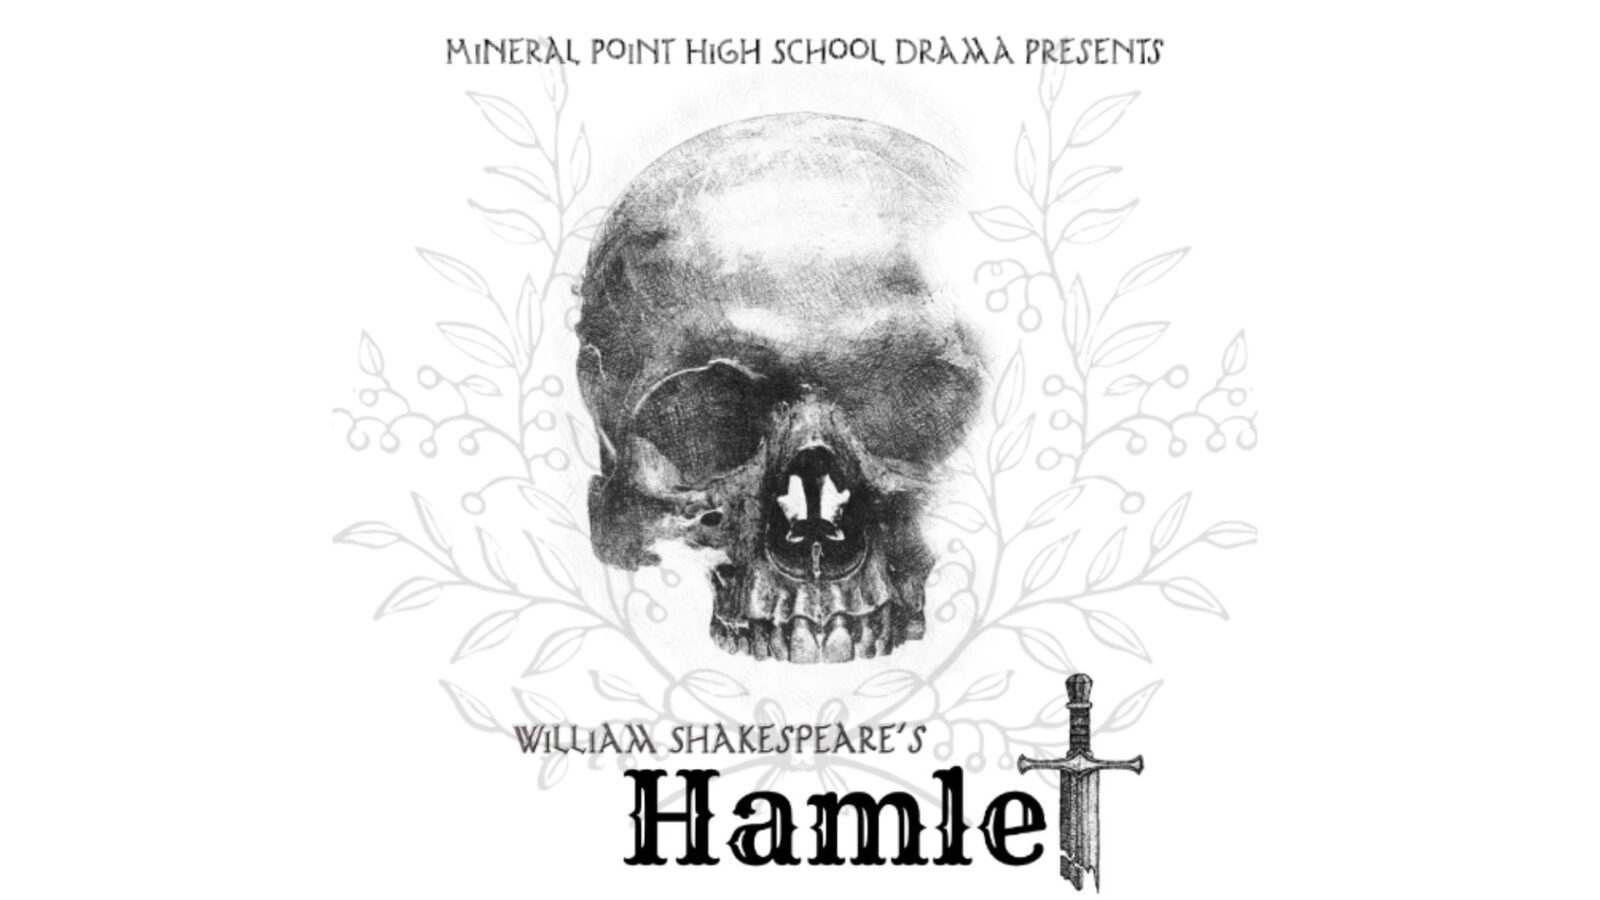 Hamlet – The Tragedy of Hamlet, Prince of Denmark